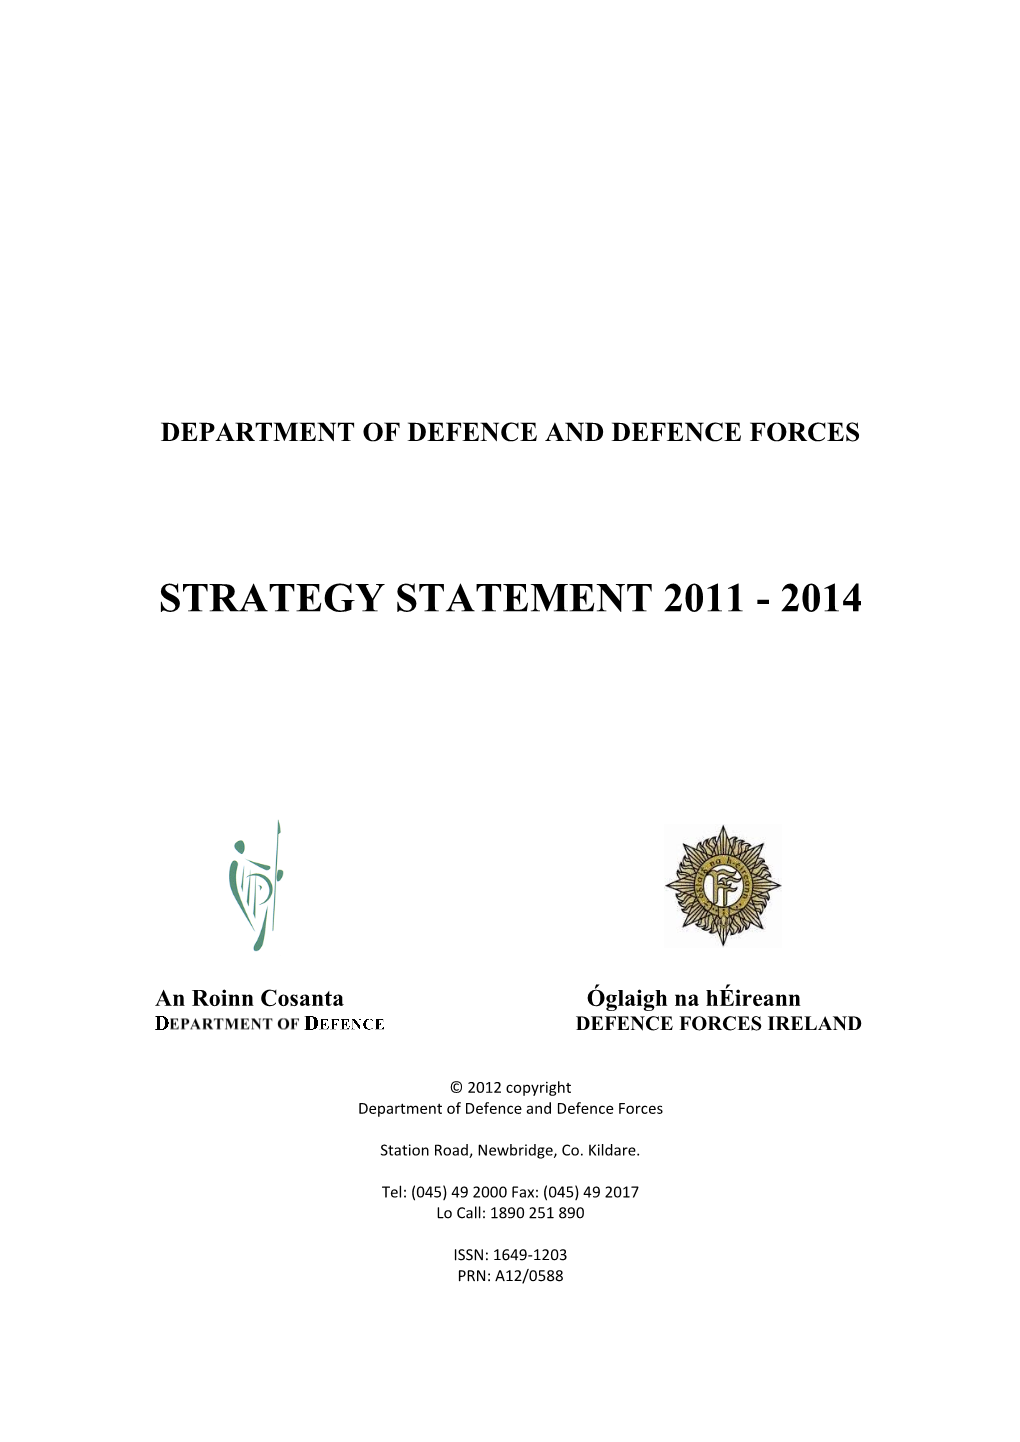 Ireland: Strategy Statement 2011-2014